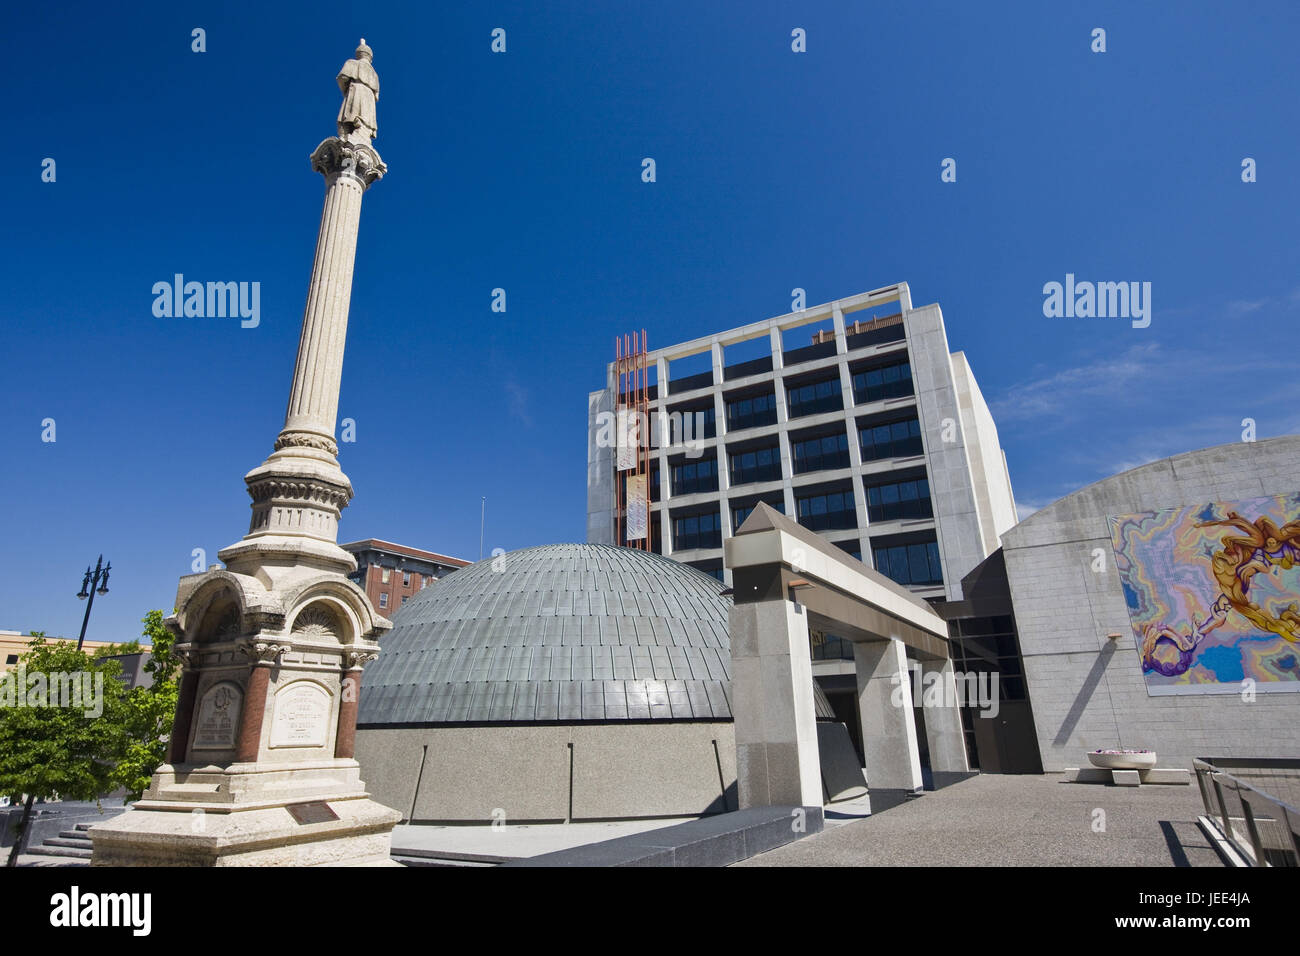 Canada, Manitoba, Winnipeg, Manitoba museum, monument, dome, pillar, Stock Photo